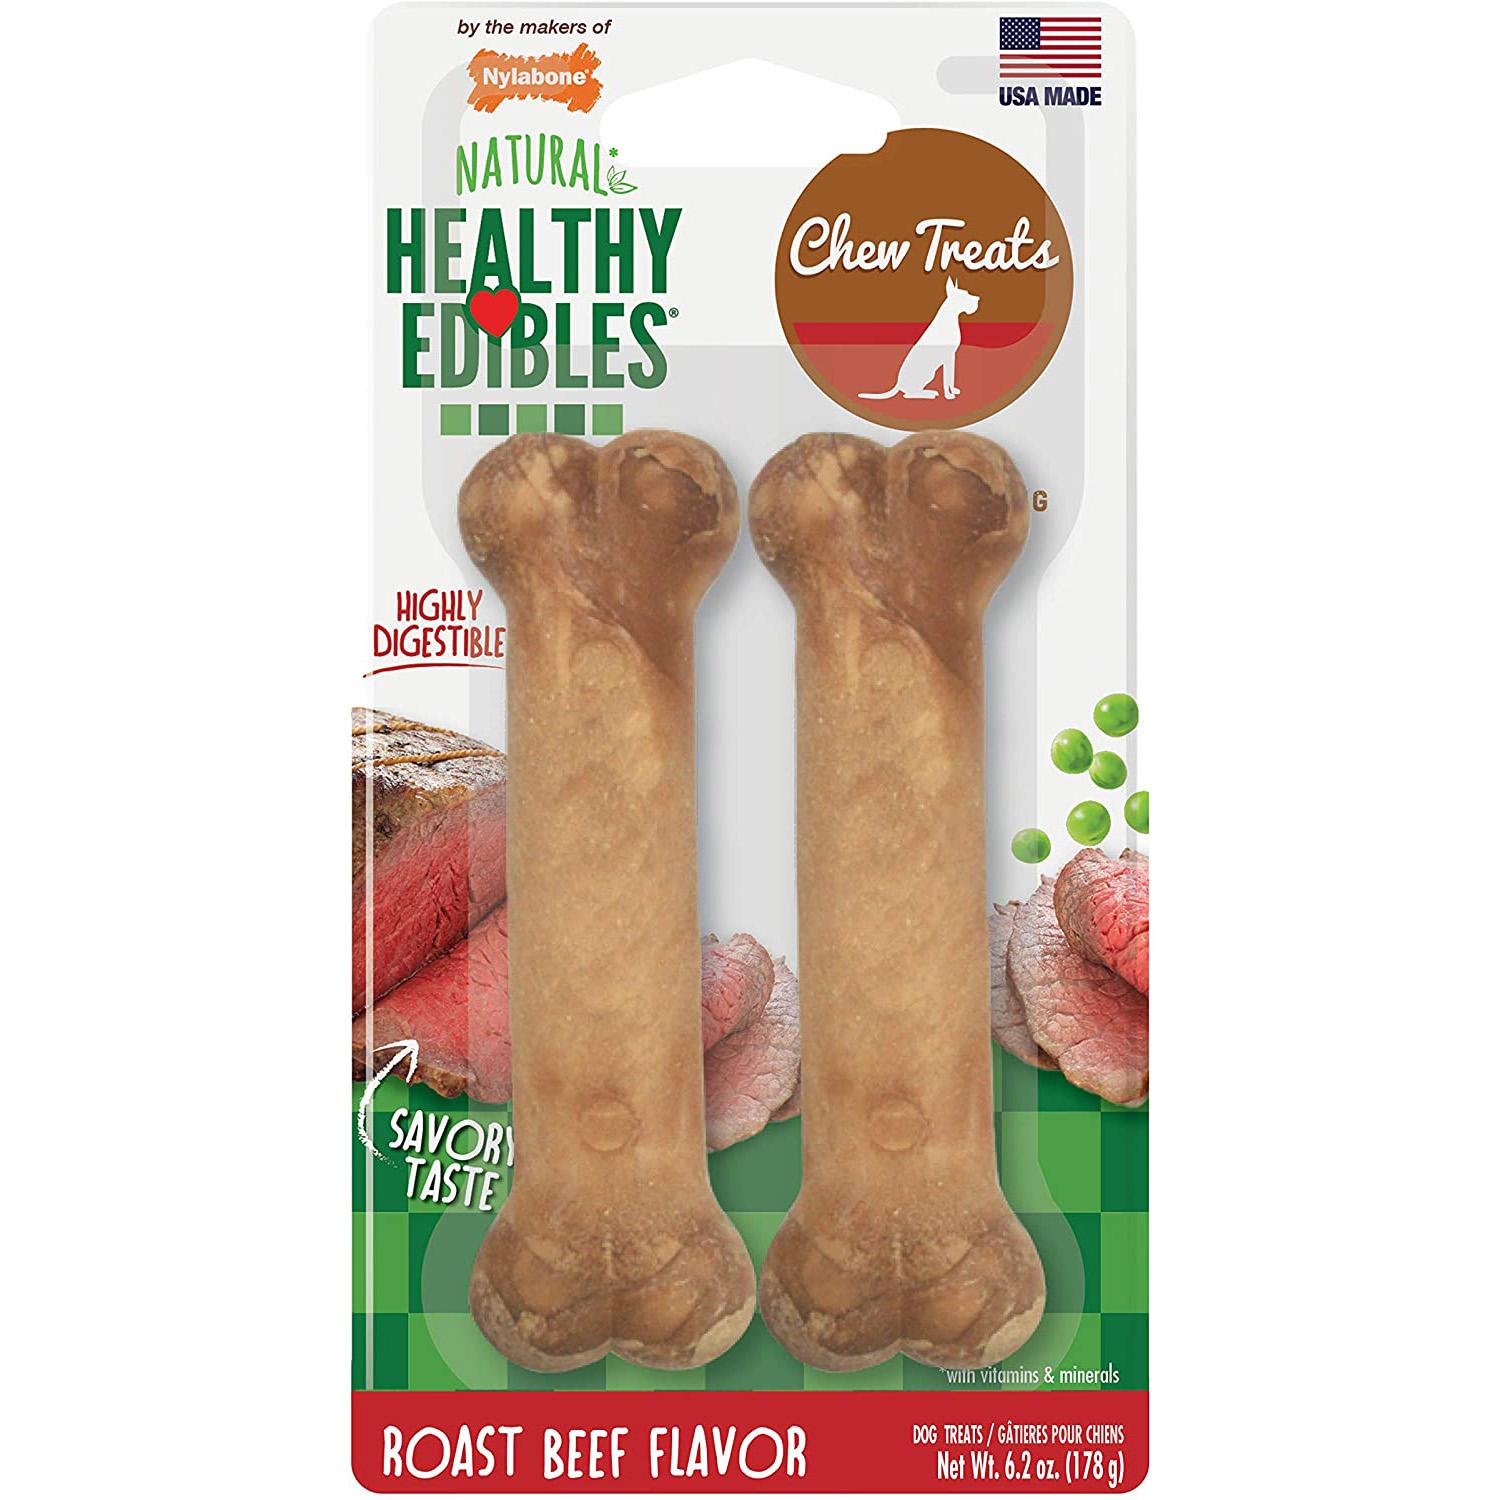 2x Nylabone Healthy Edibles Flavored Dog Treat Bones for $2.26 Shipped